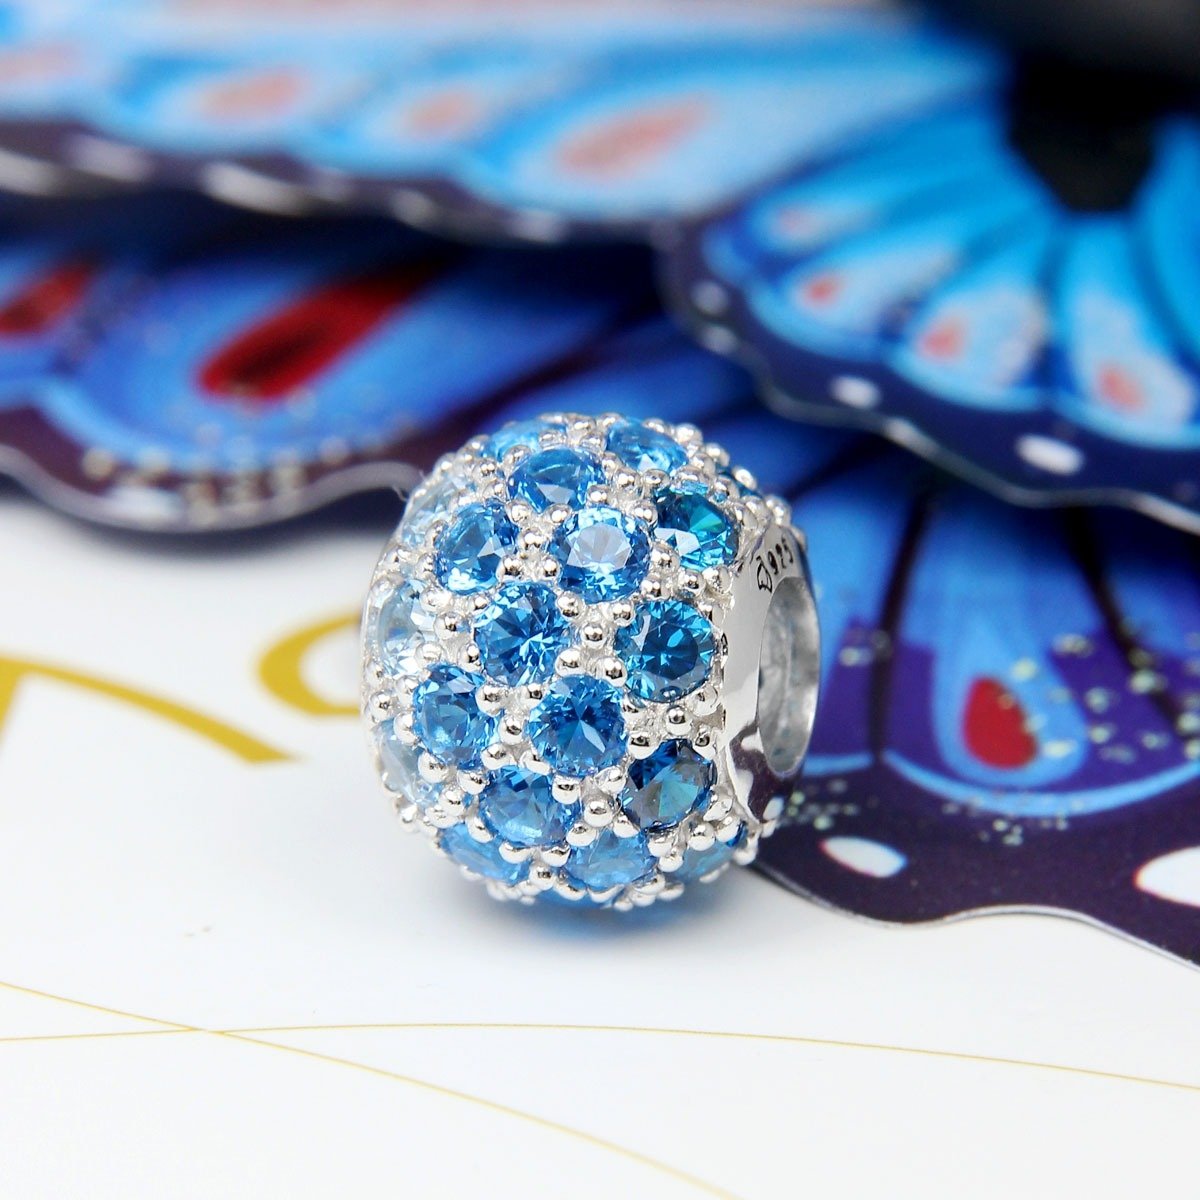 Ombre Blue Nano Pave Bead – Beads Candy Shop